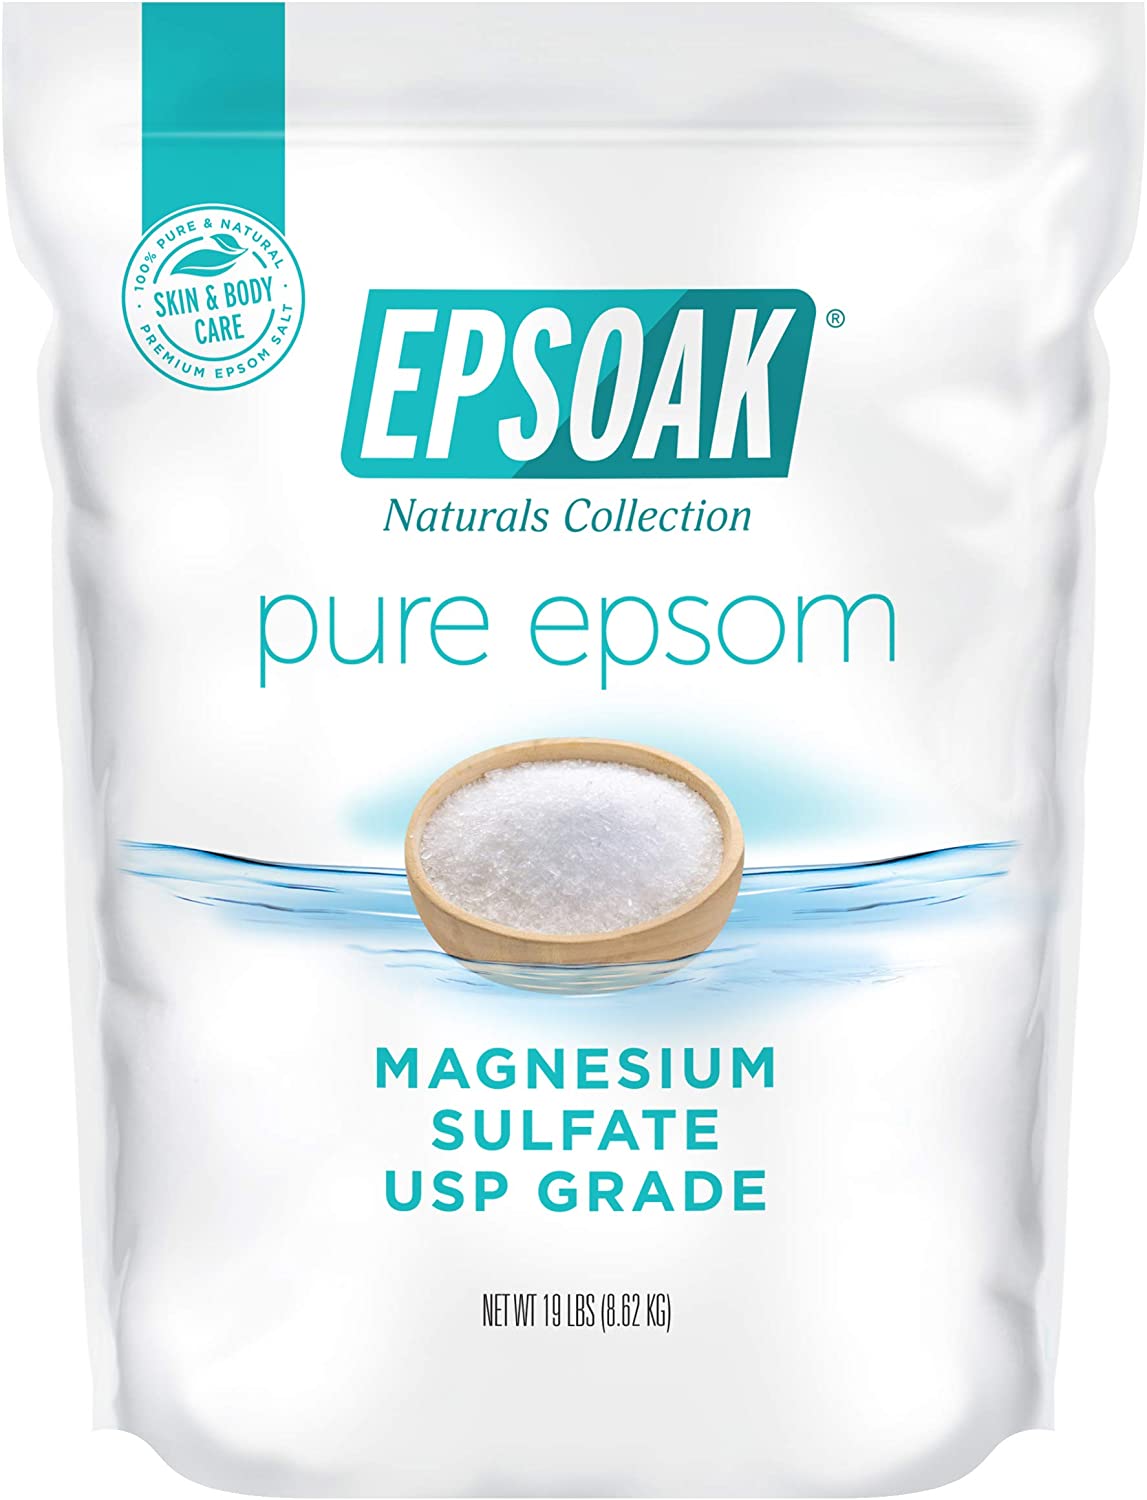 How to Use Epsom Salt to Plants